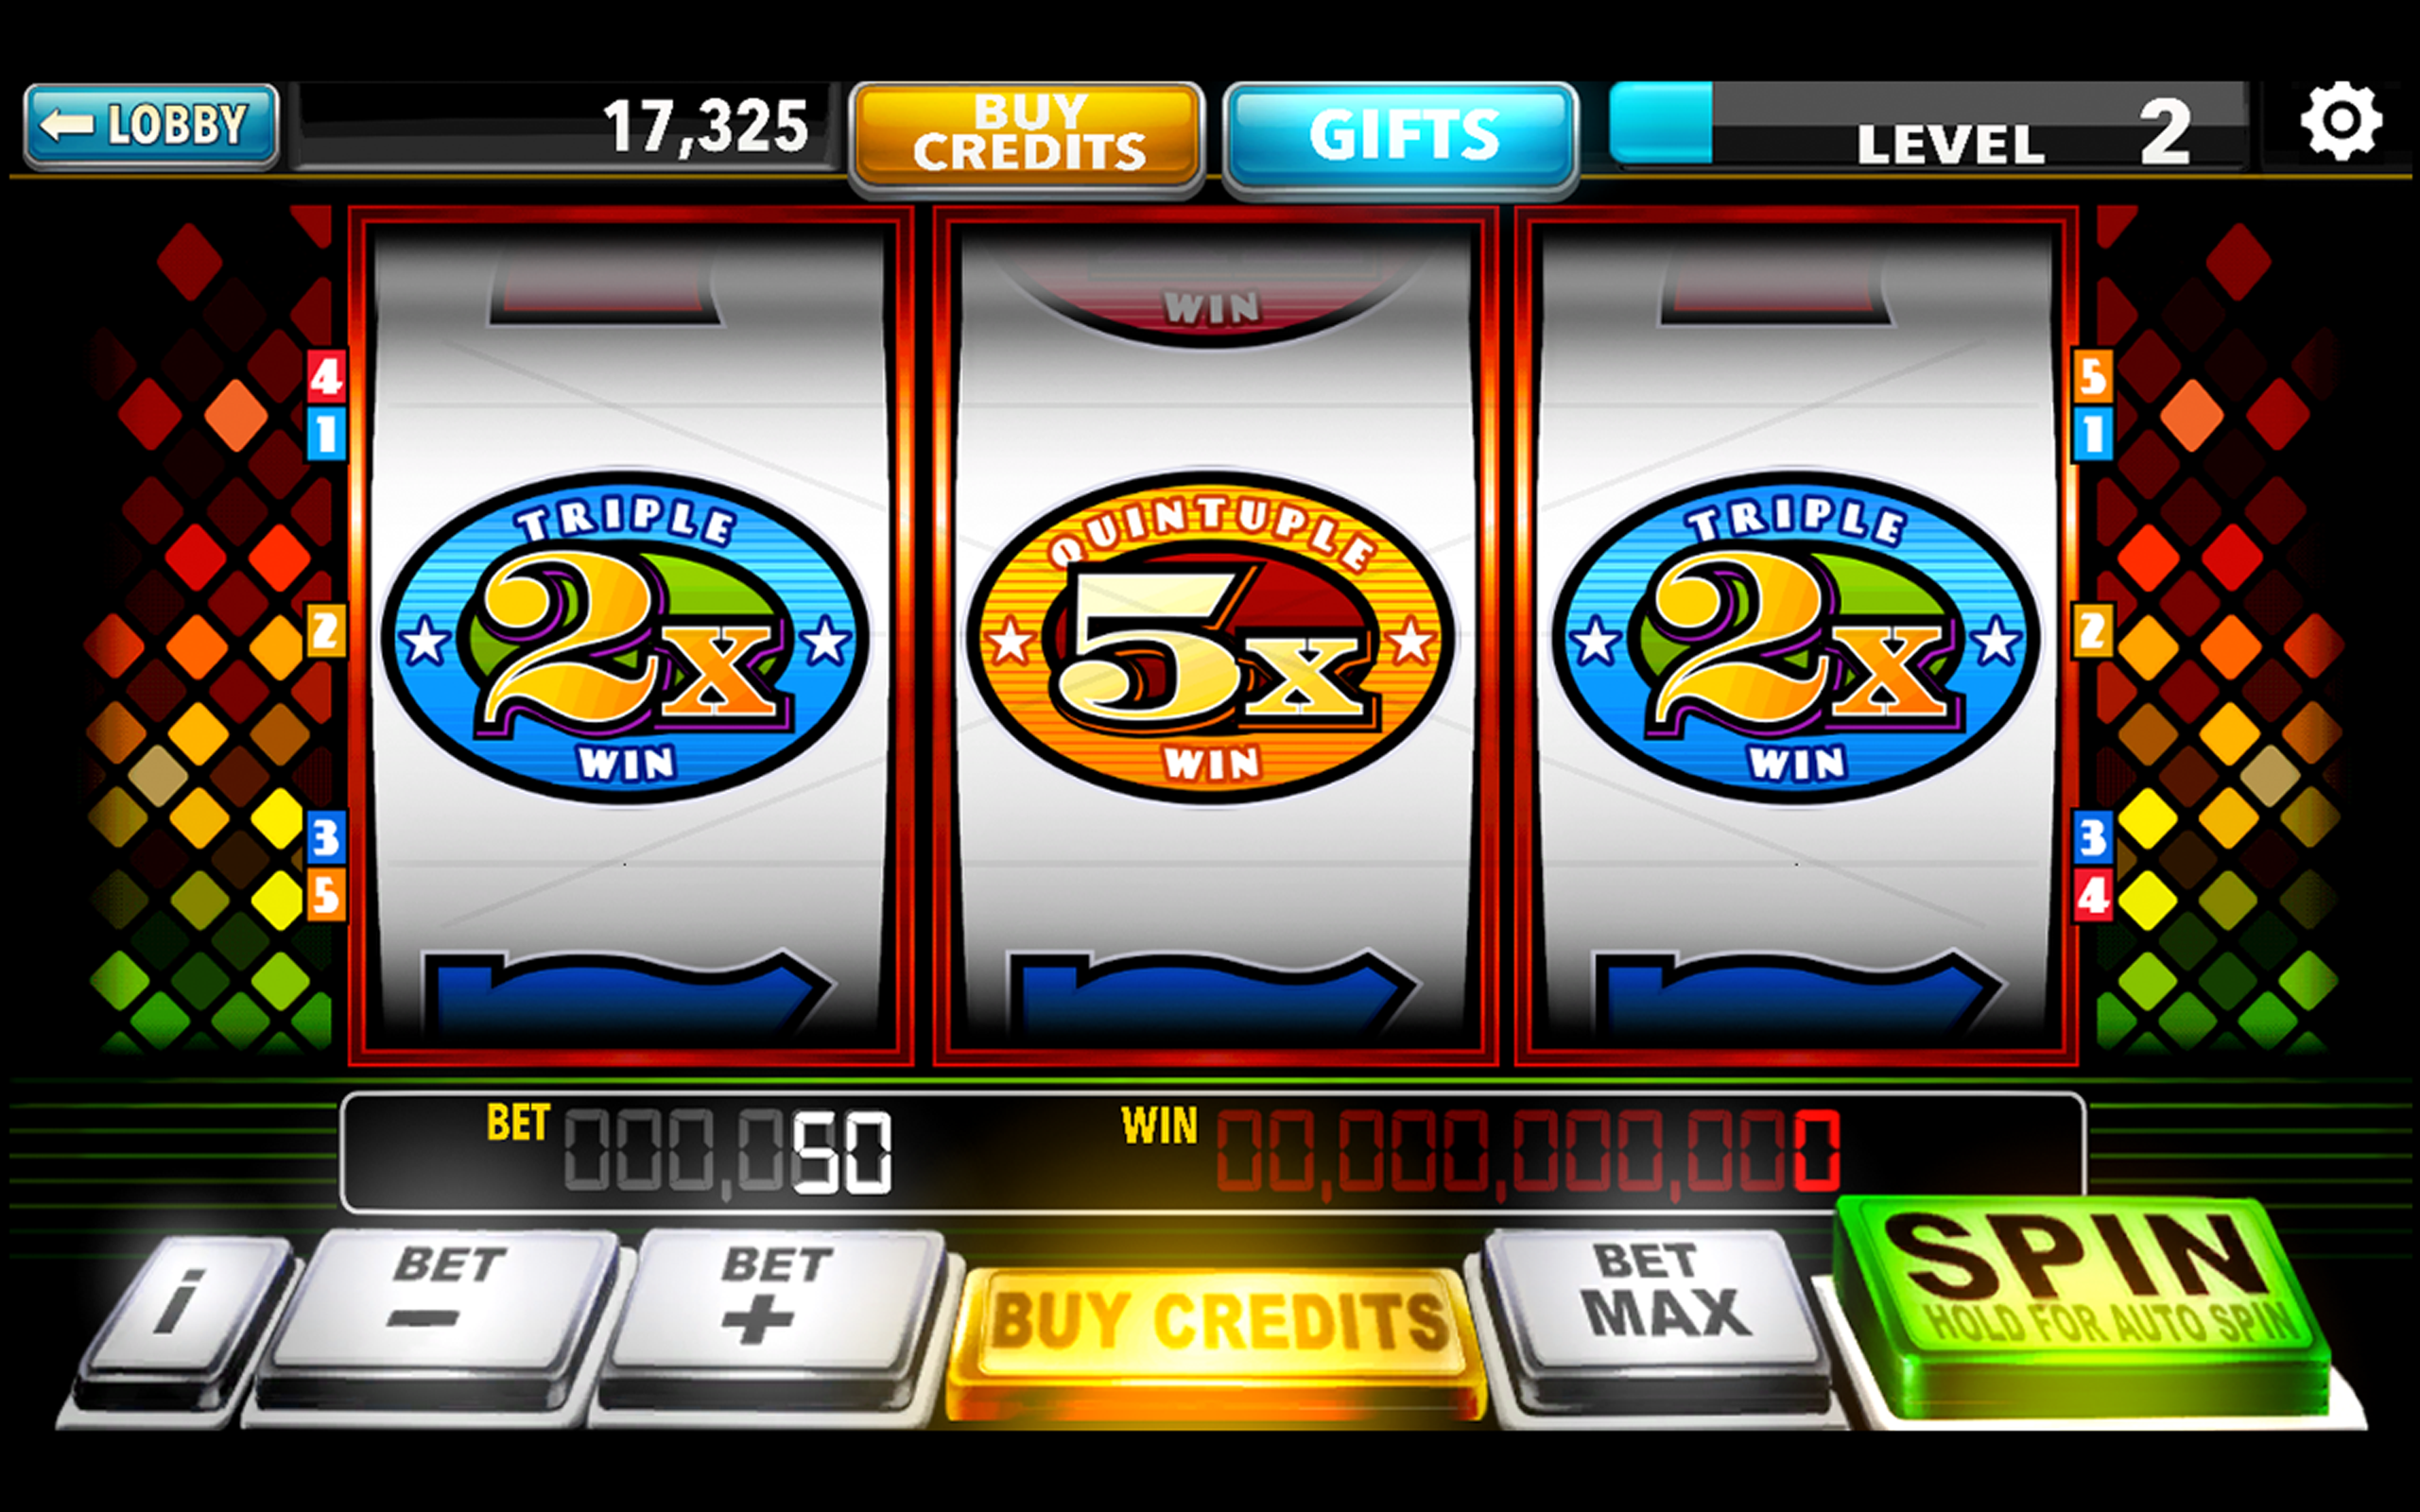 Play Casino Slot Games Online